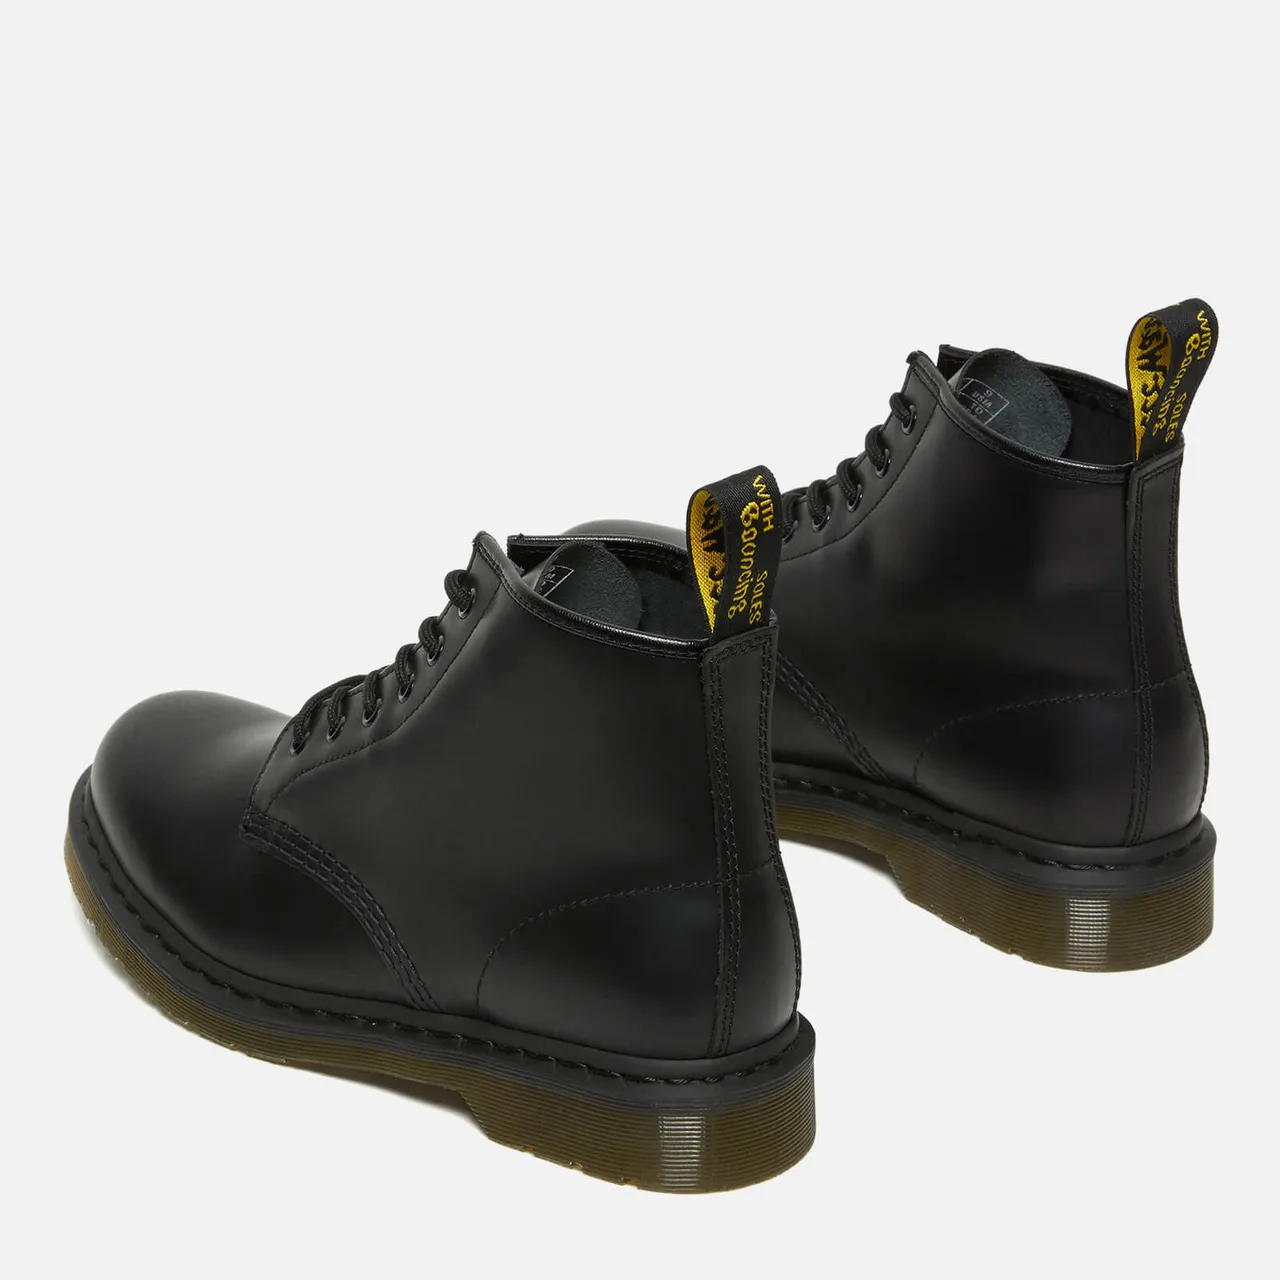 Dr. Martens 101 Smooth Leather 6-Eye Boots - Black - UK